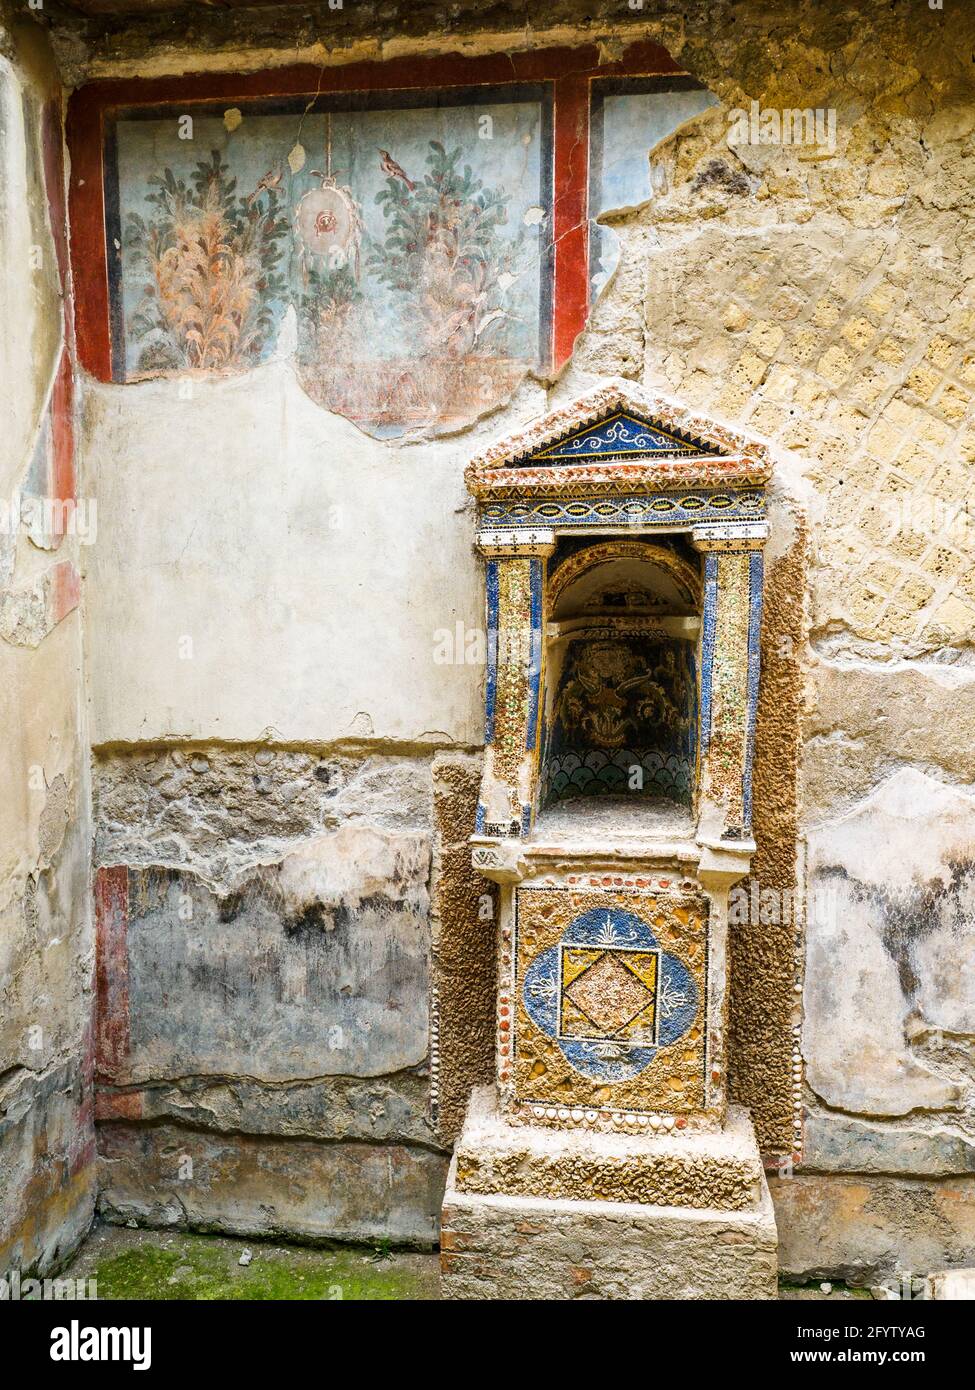 Mosaic lararium (shrine) - House of the Skeleton (Casa dello Scheletro) - Herculaneum ruins, Italy Stock Photo